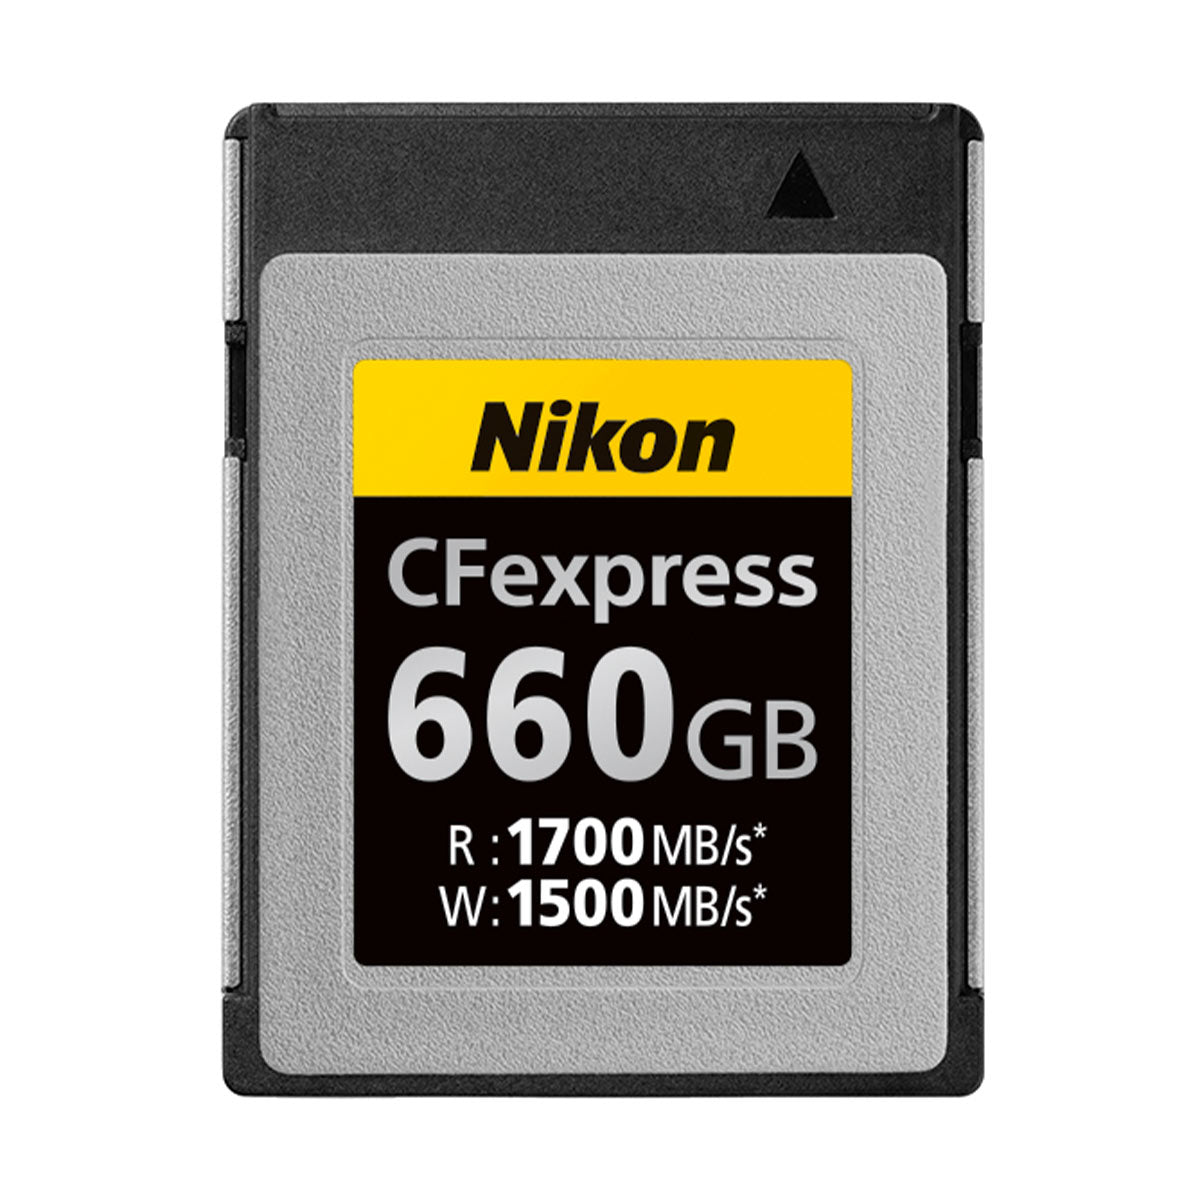 Nikon 660GB CFexpress Type B Memory Card